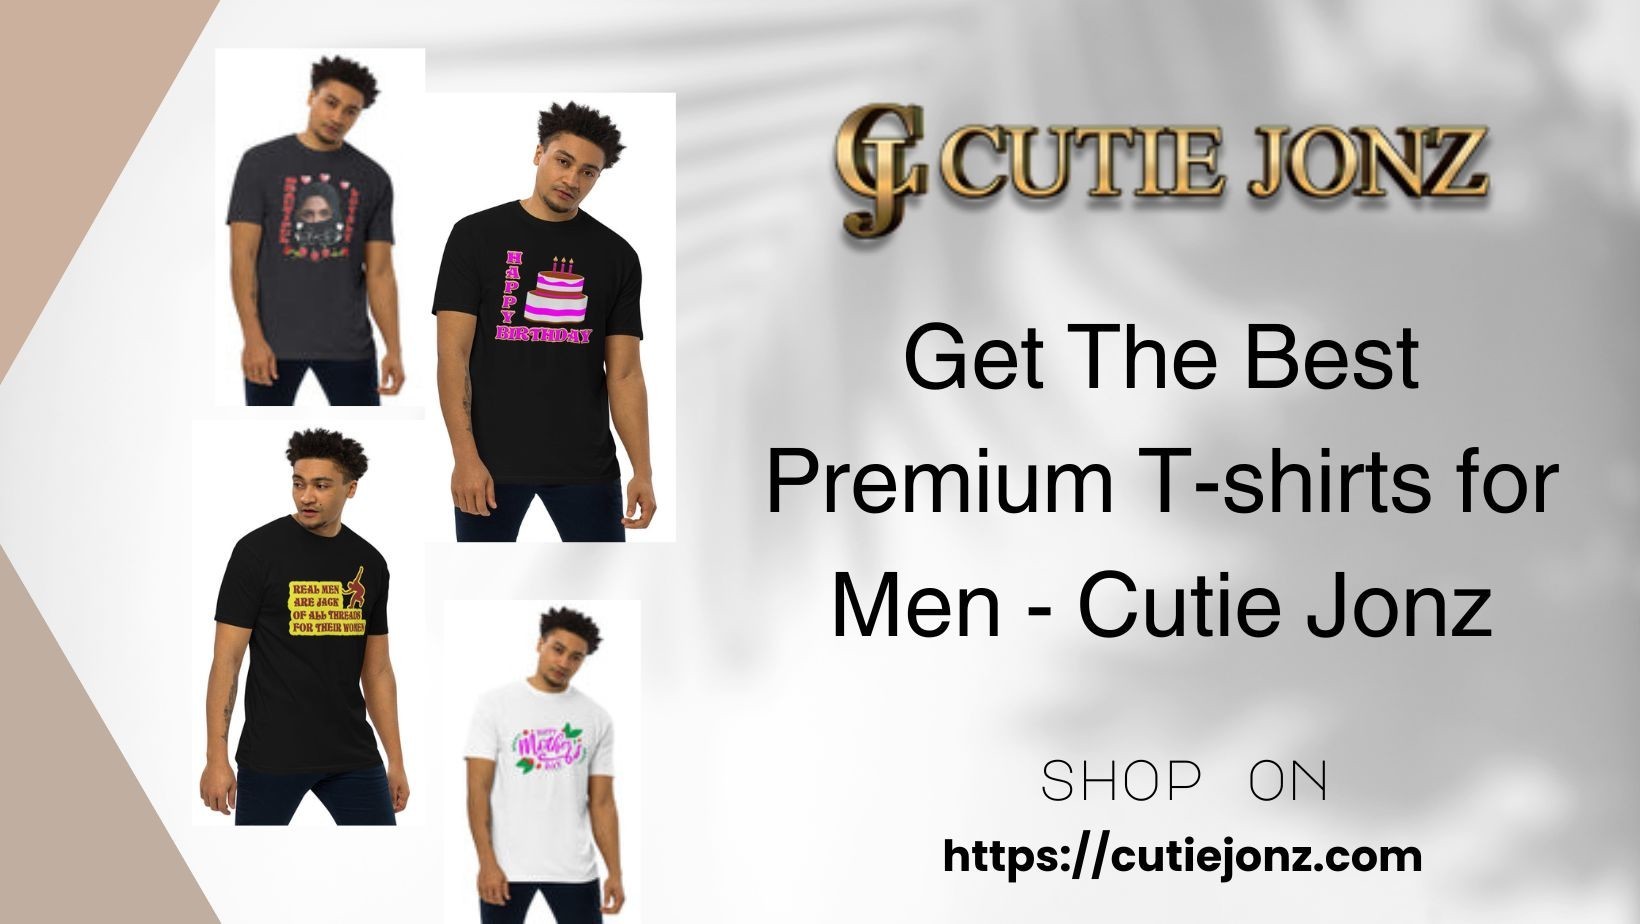 Get The Best Premium T-shirts for Men - Cutie Jonz